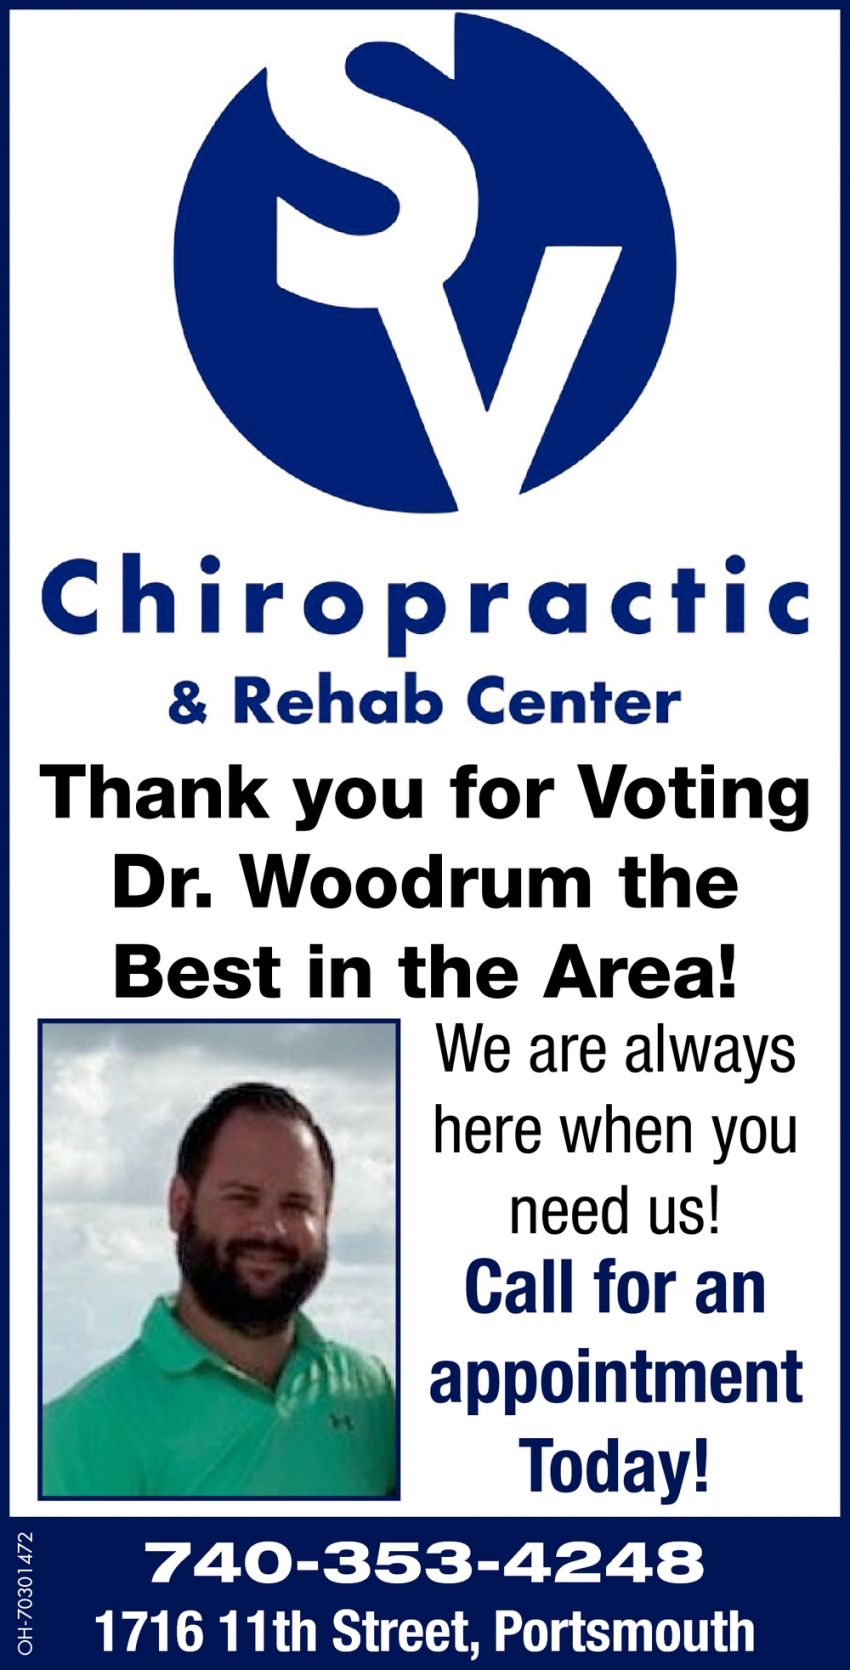 Best Chiropractor in the Area